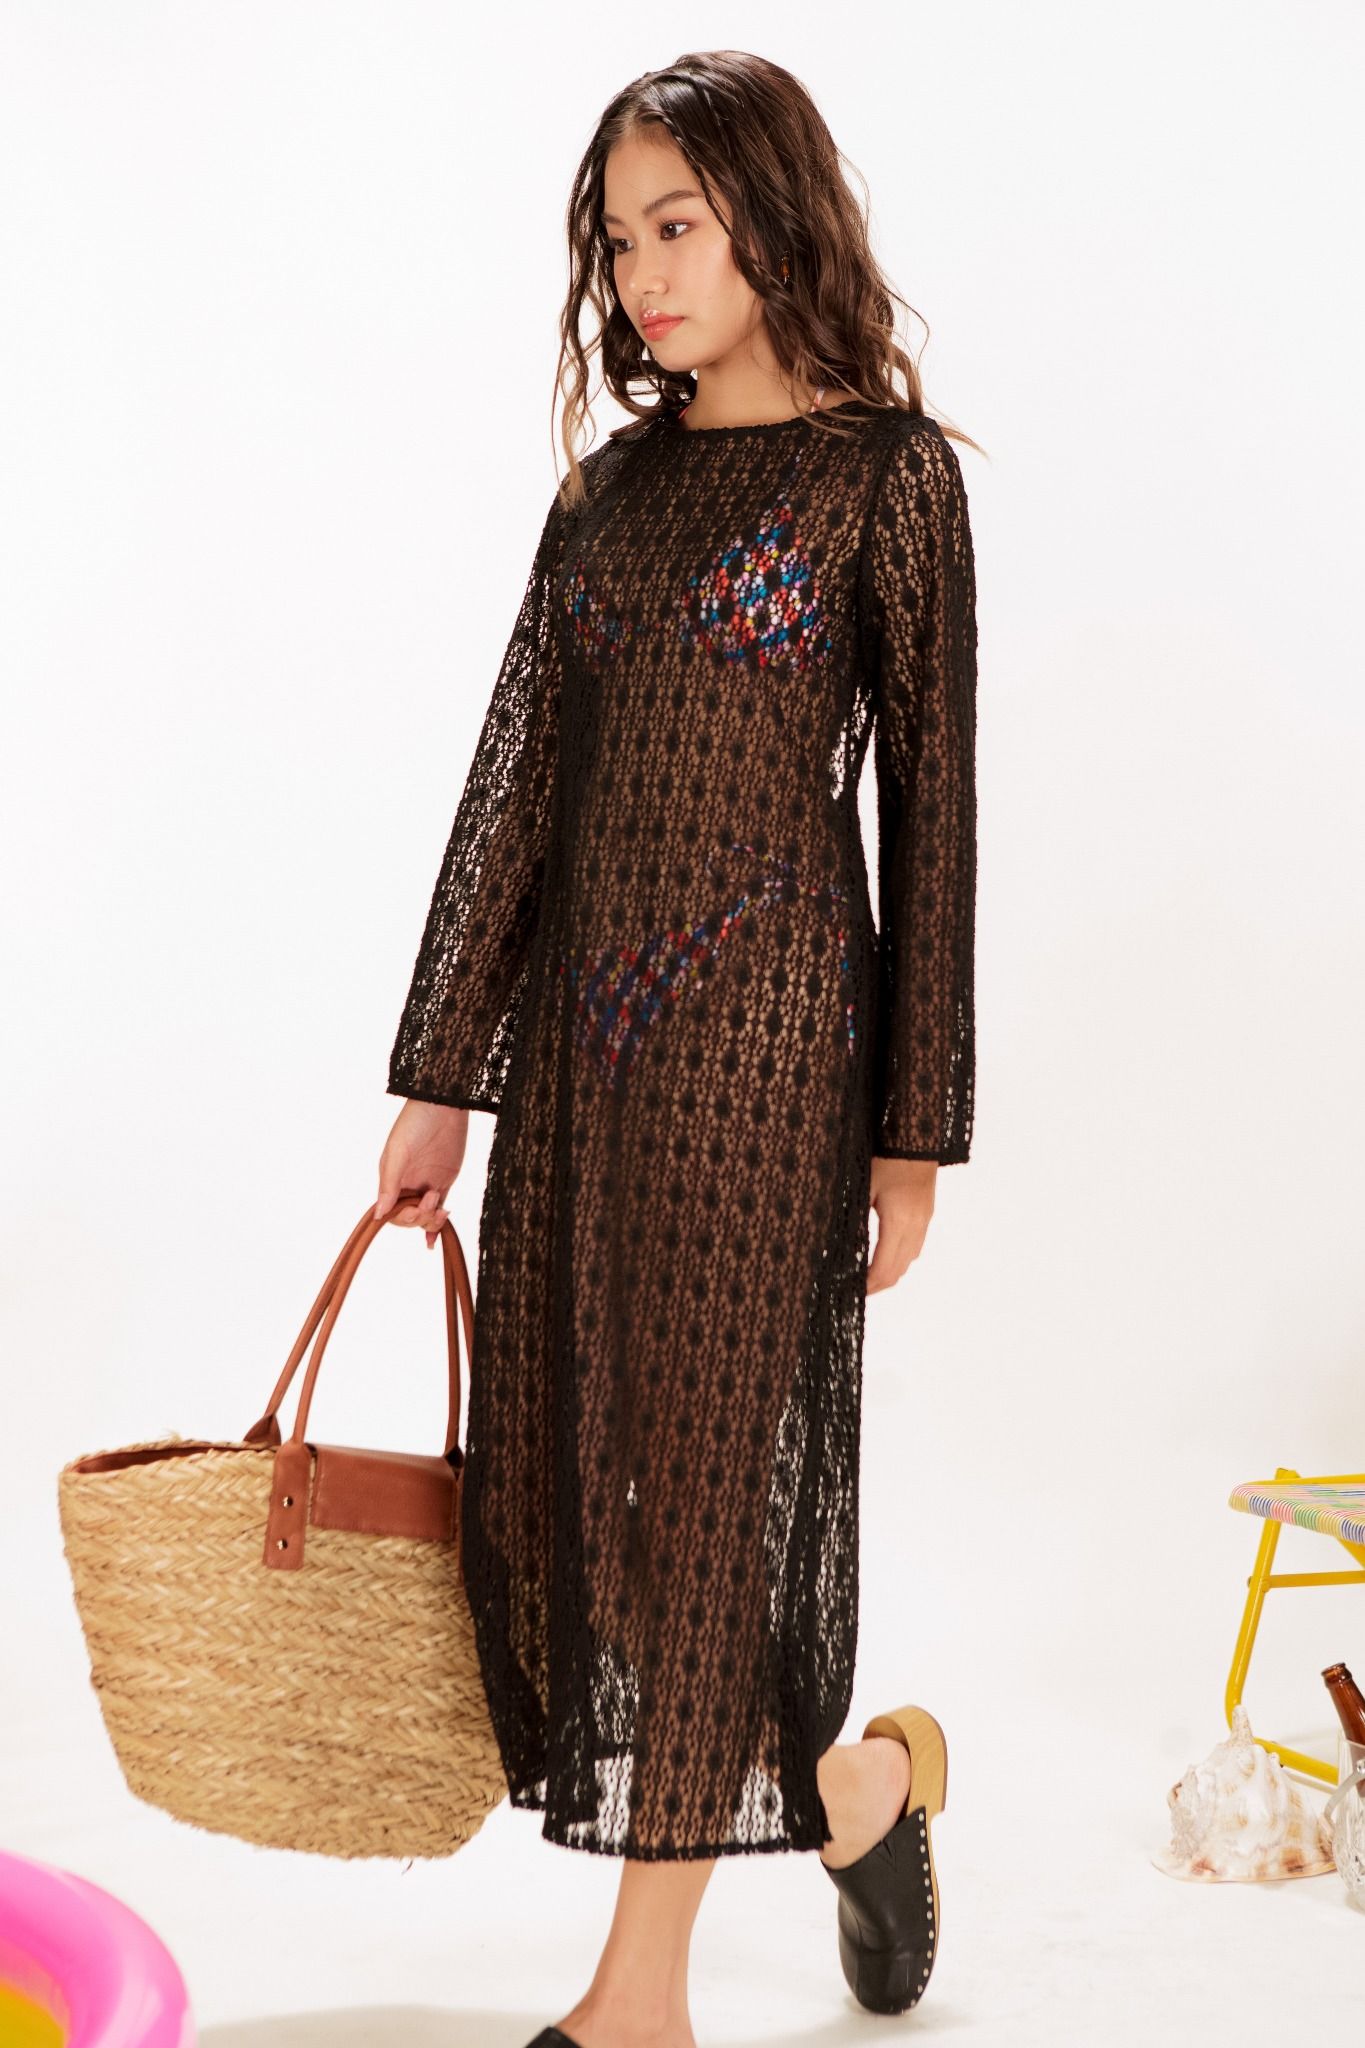  Black Crochet Beach Cover Up Maxi Dress 